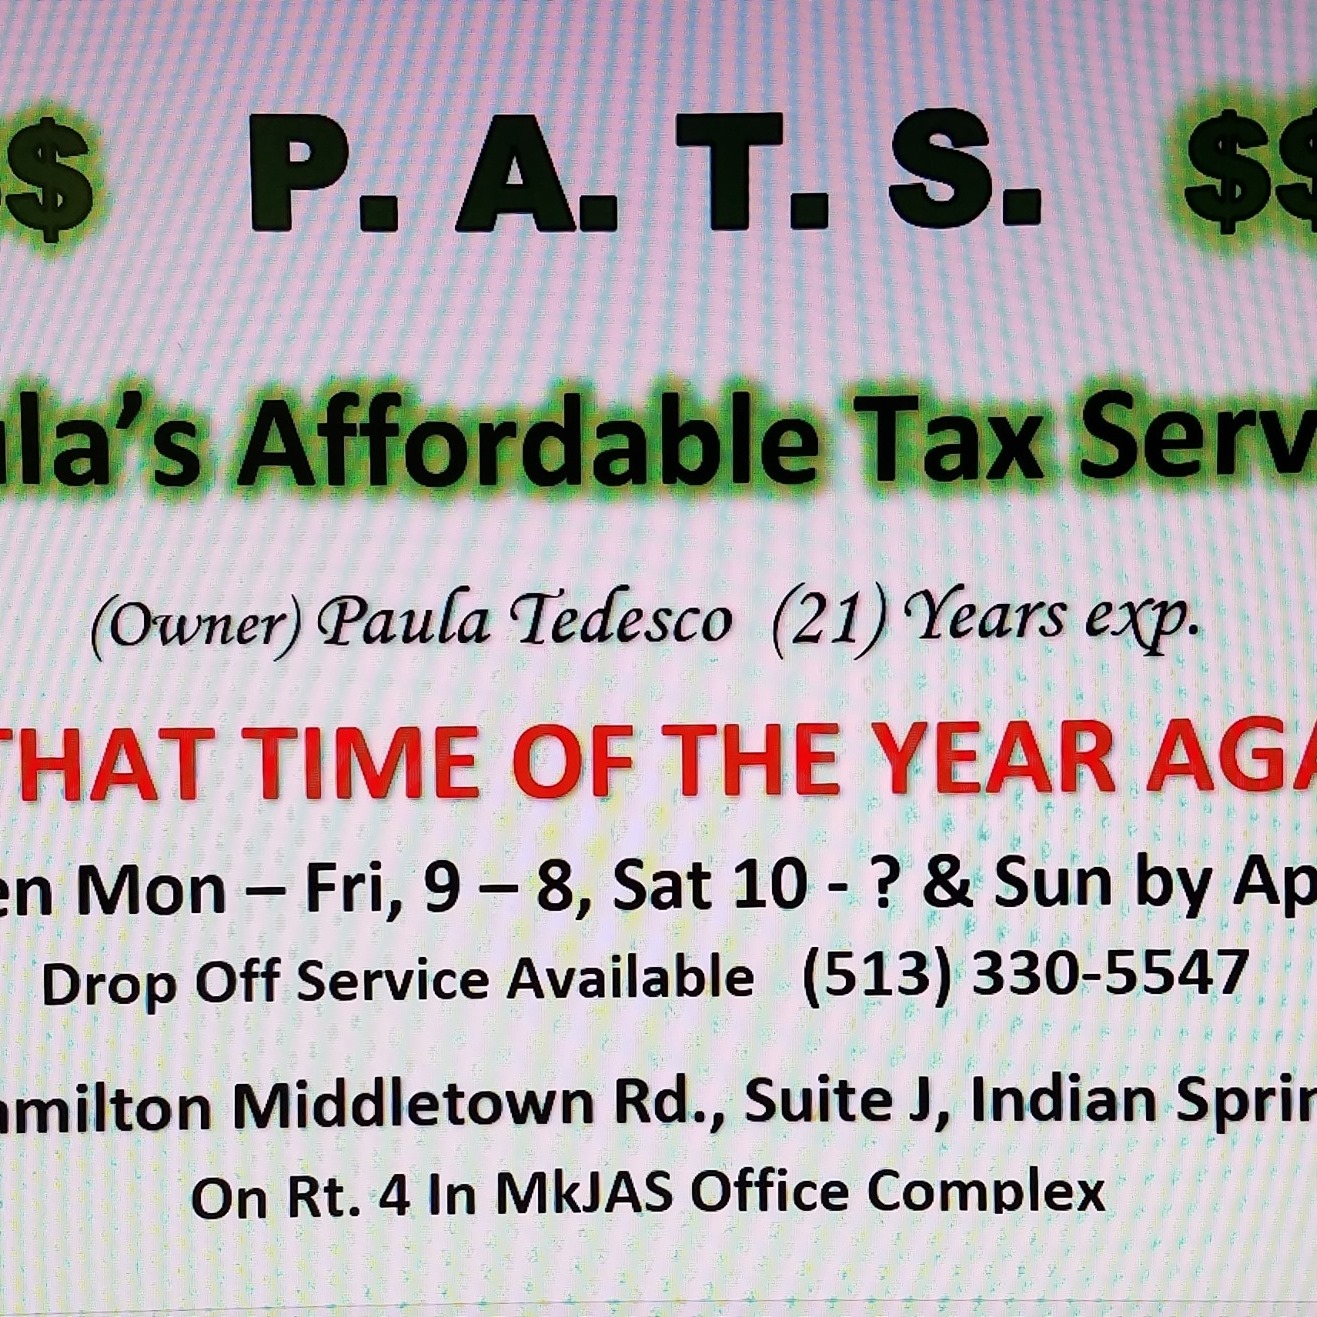 Paula's Affordable Tax Service & Associates